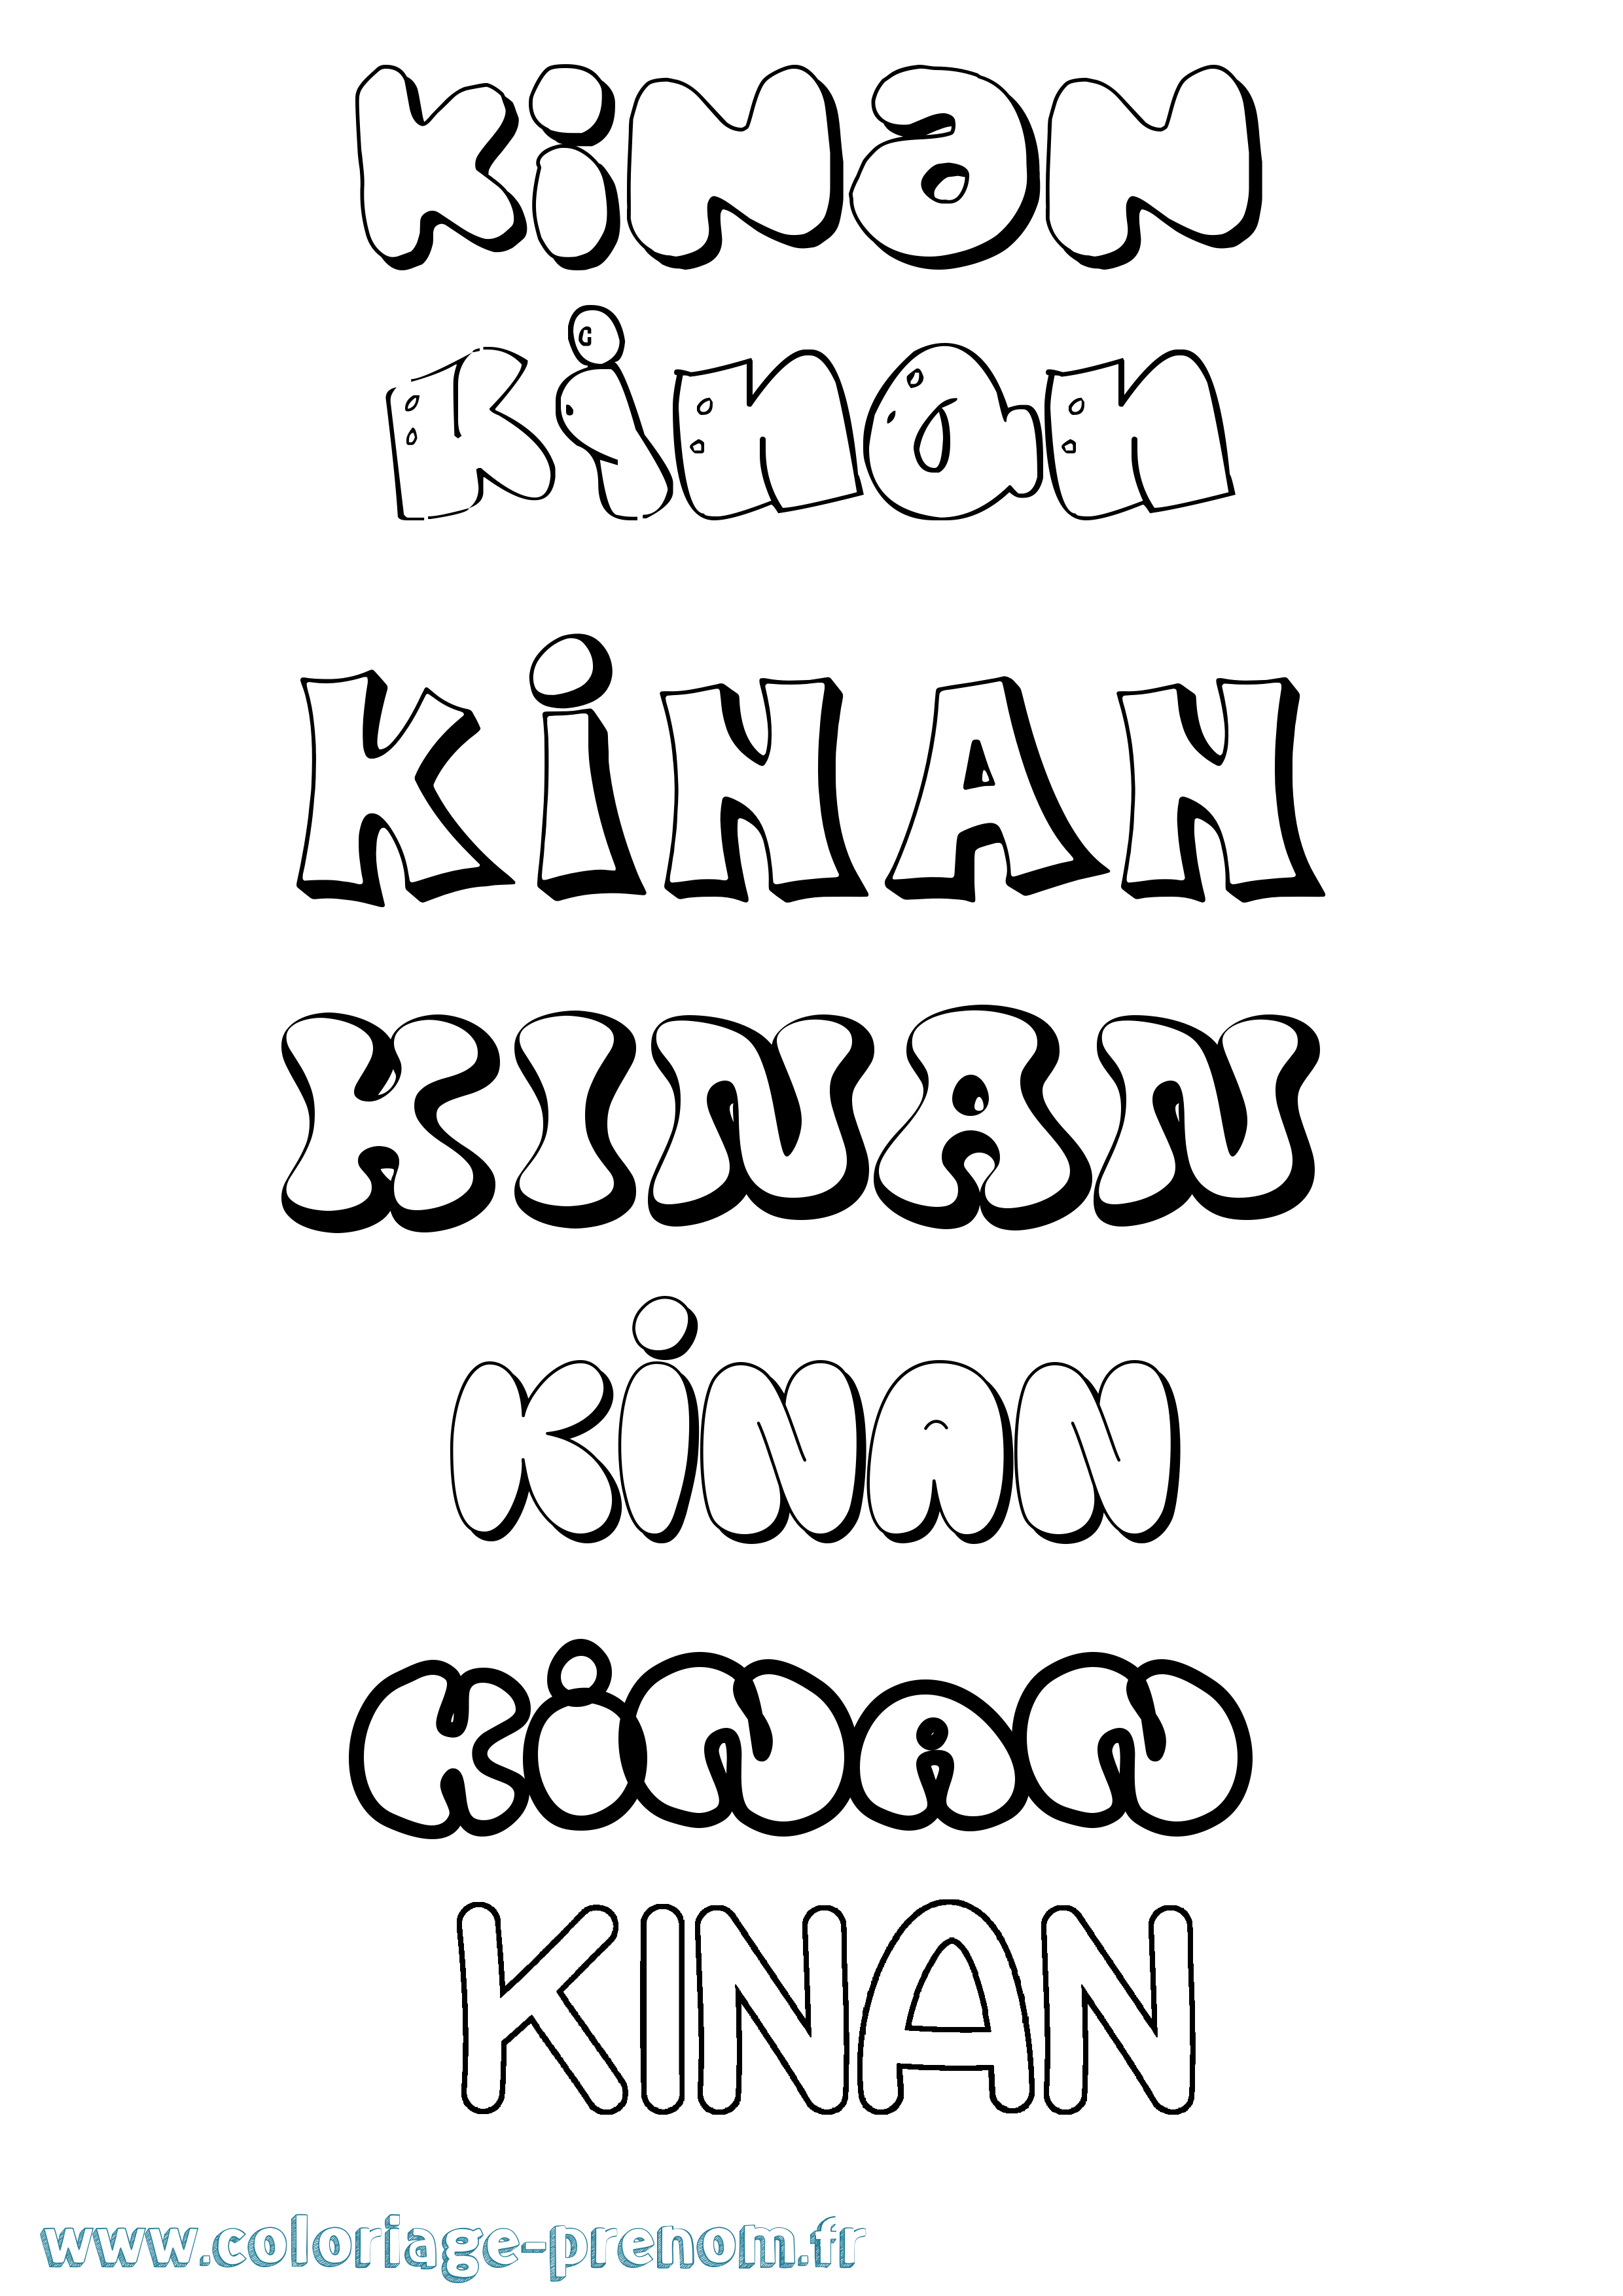 Coloriage prénom Kinan Bubble